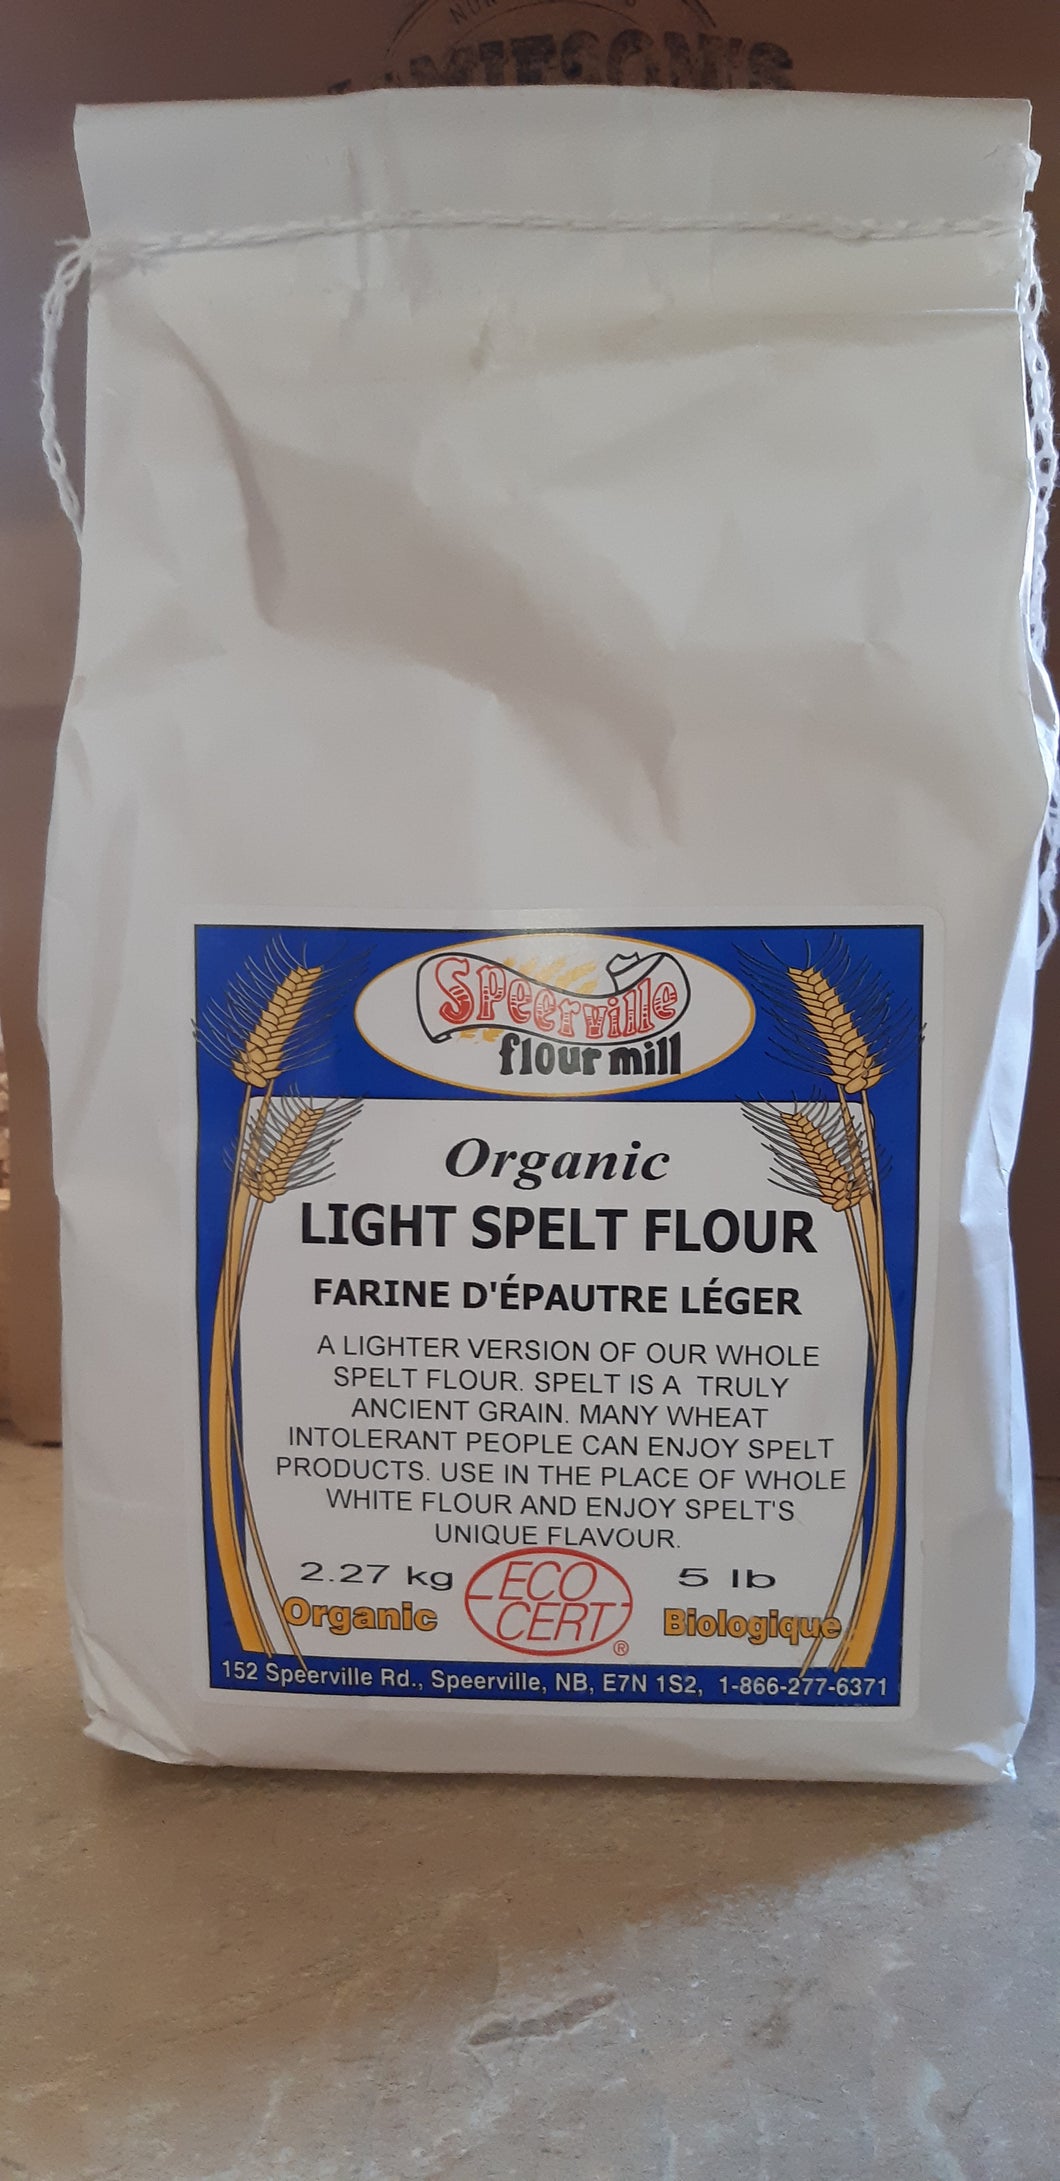 Light spelt flour